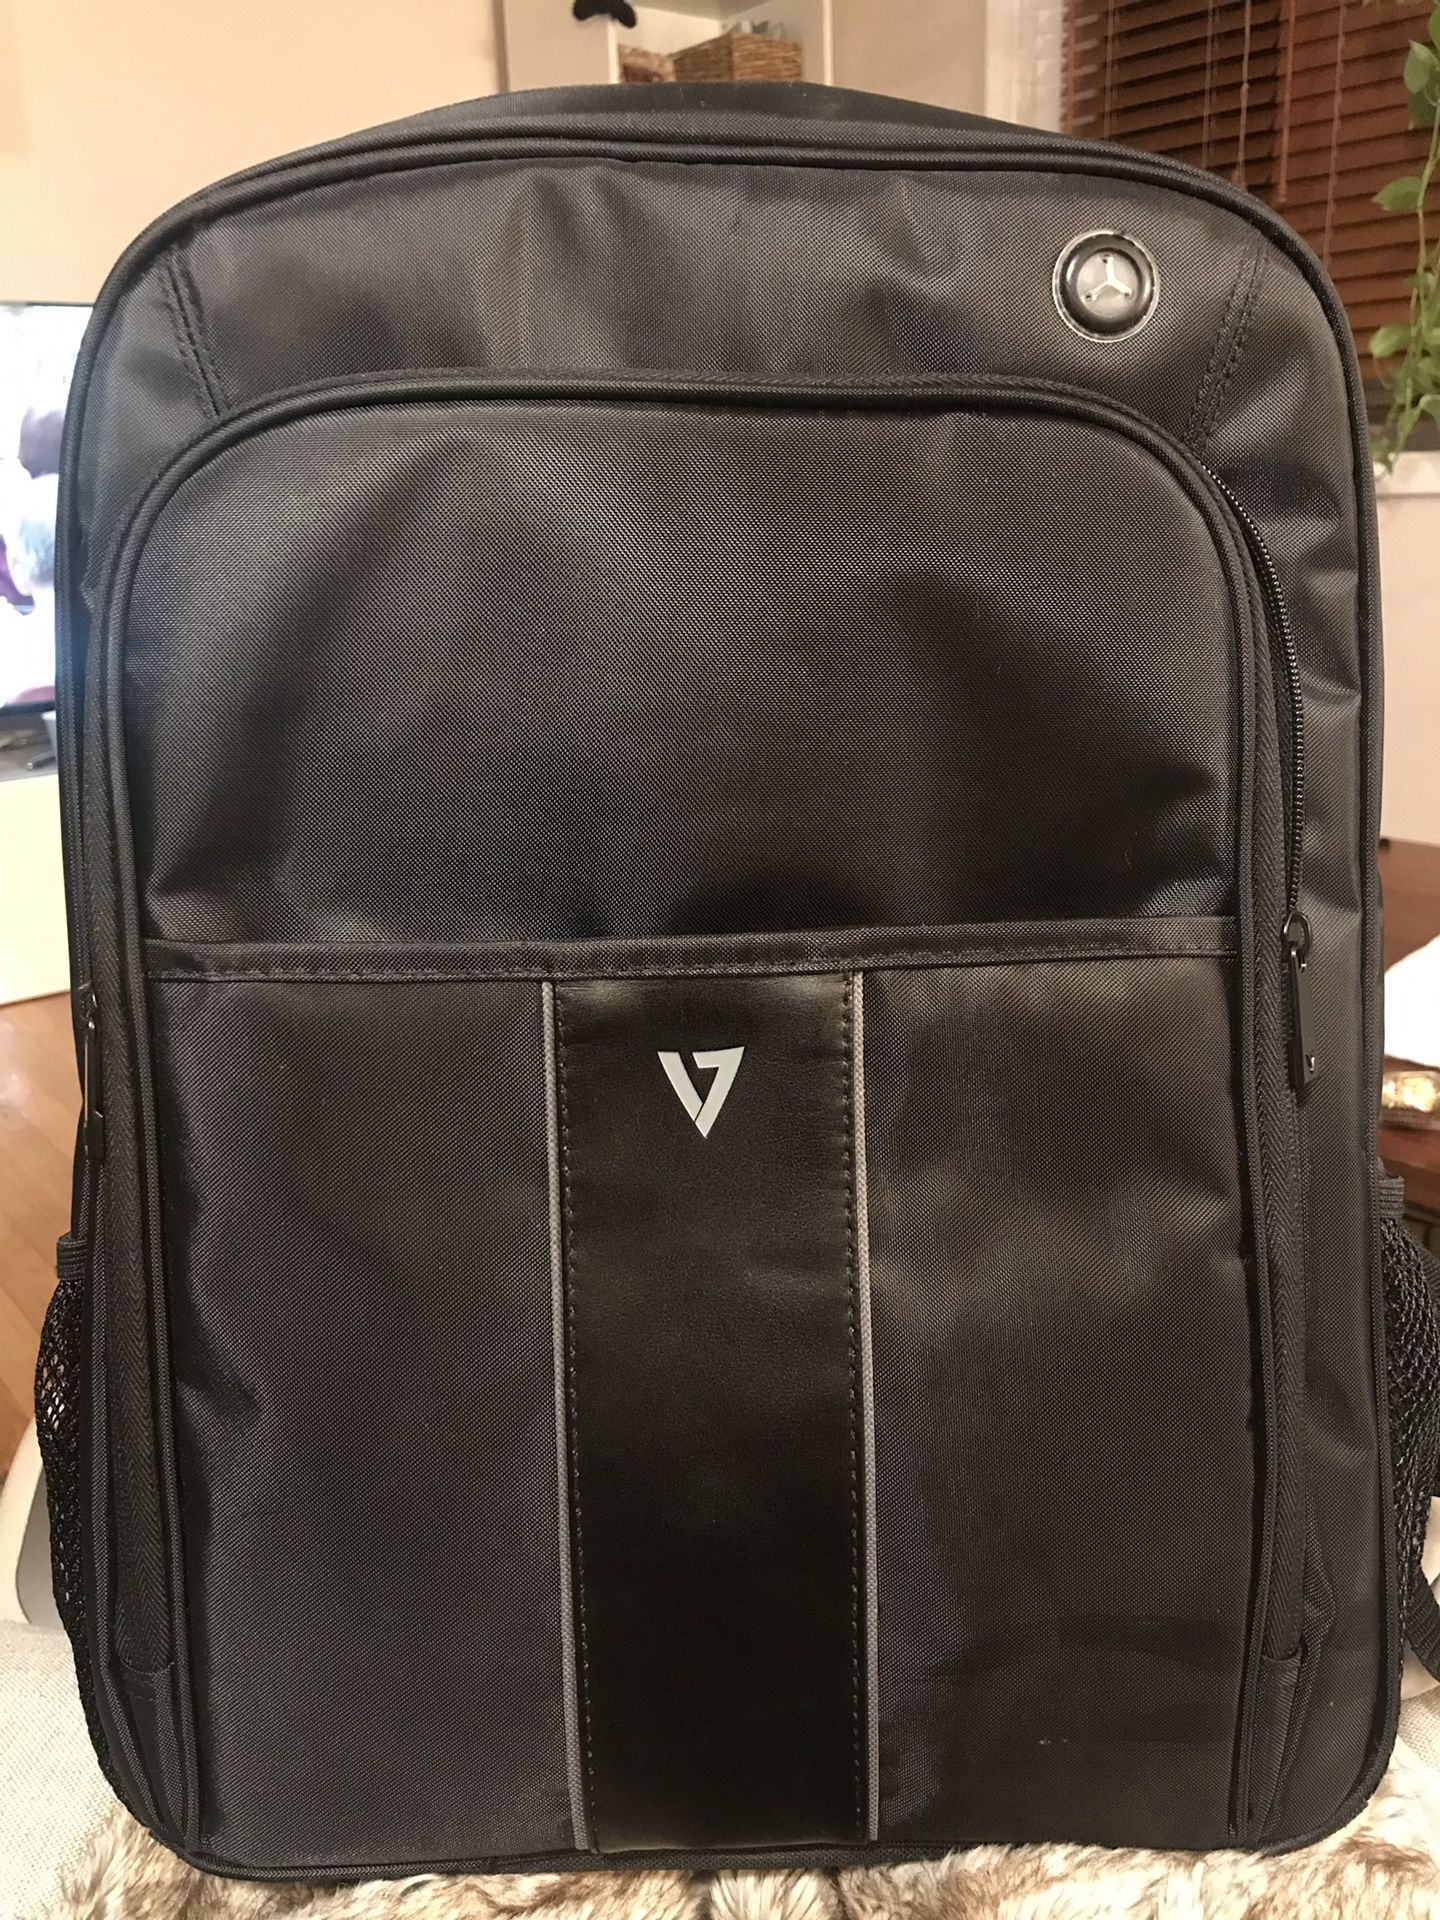 Black professional backpack